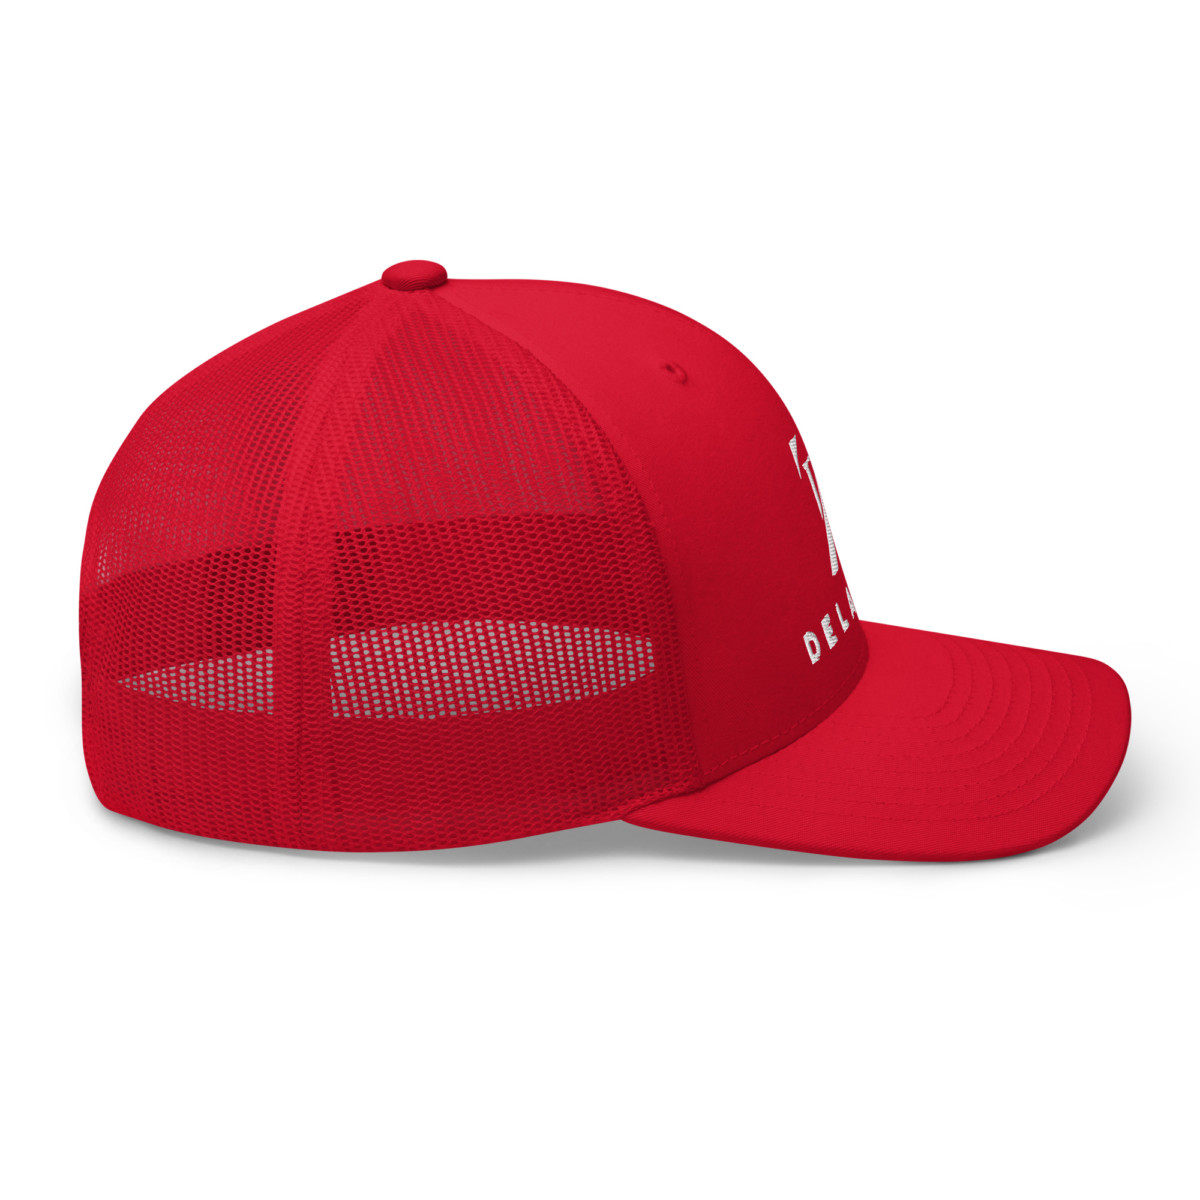 GORRA OBLACK CLASSIC RED TRUCKER CAP Color Rojo Tallas TU